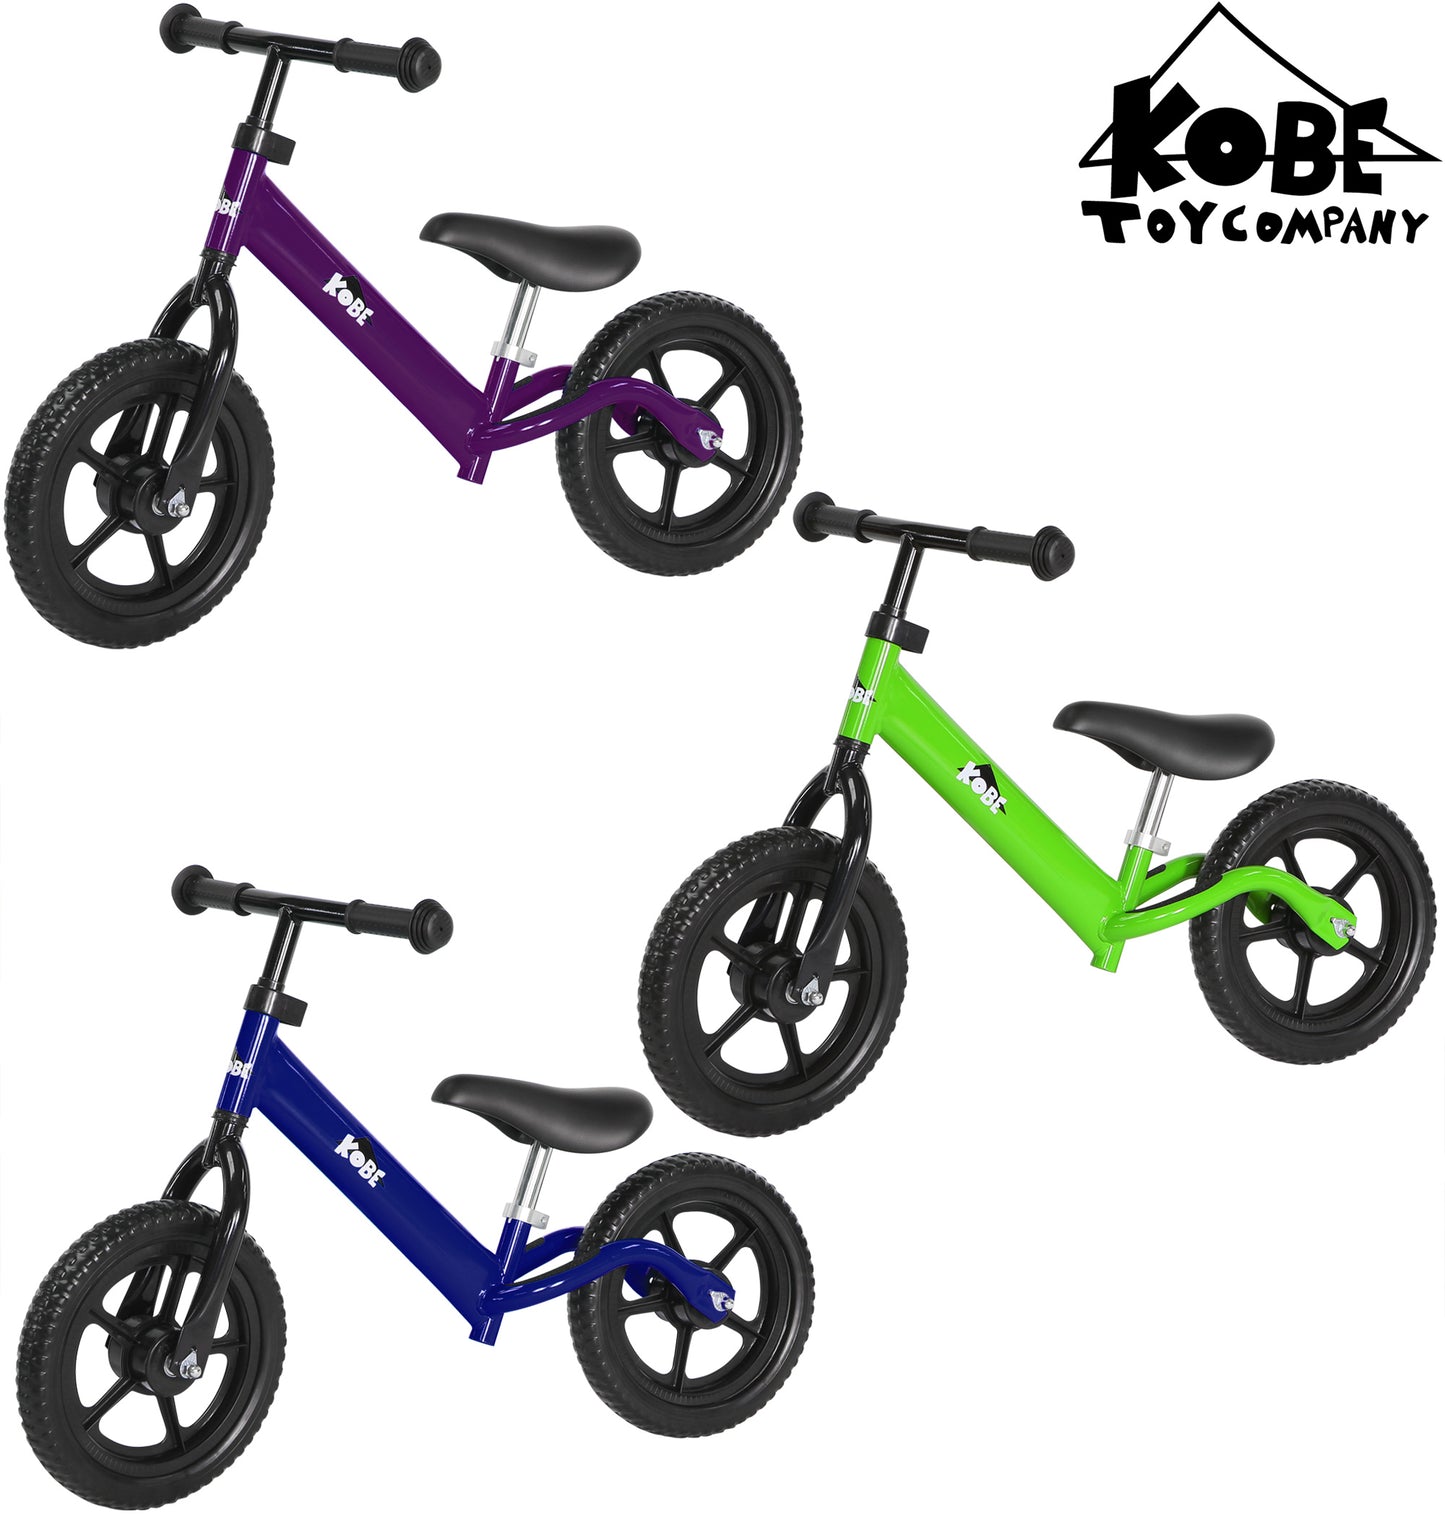 Kobe Aluminum Balance Bike - Super Light